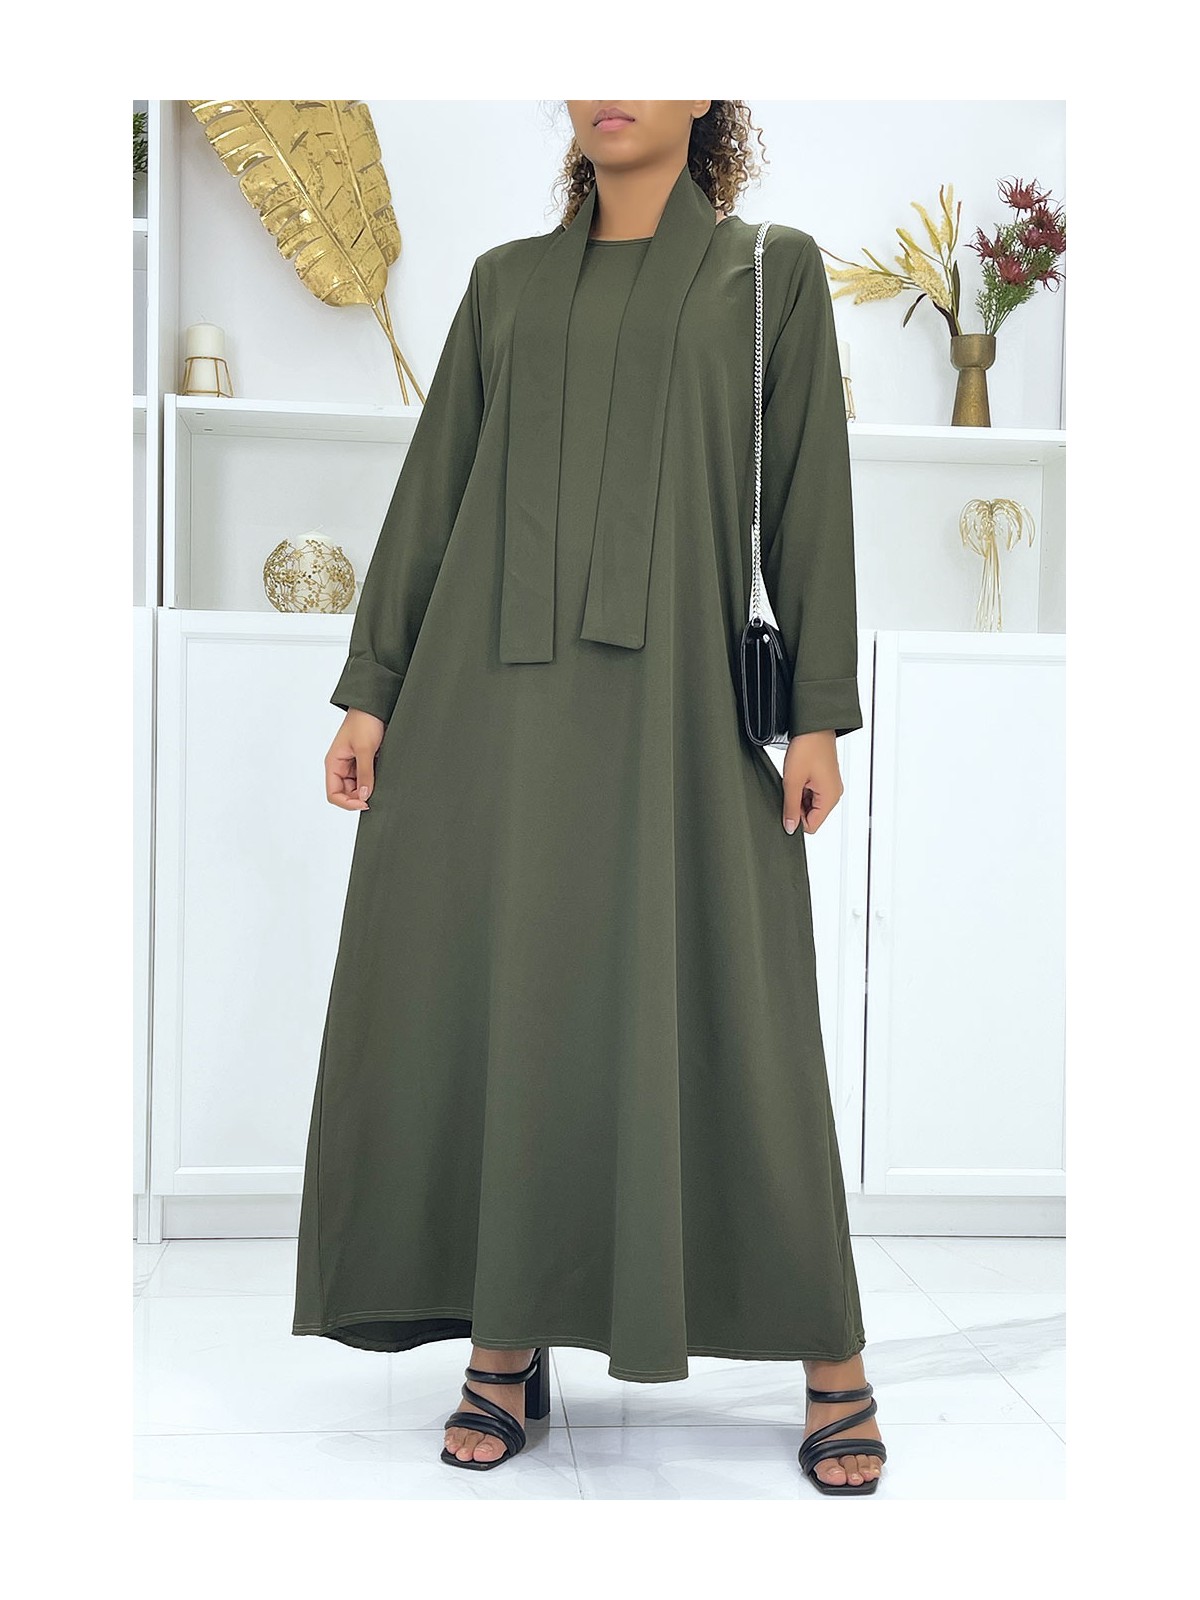 Longue abaya kaki avec poches et ceinture - 1